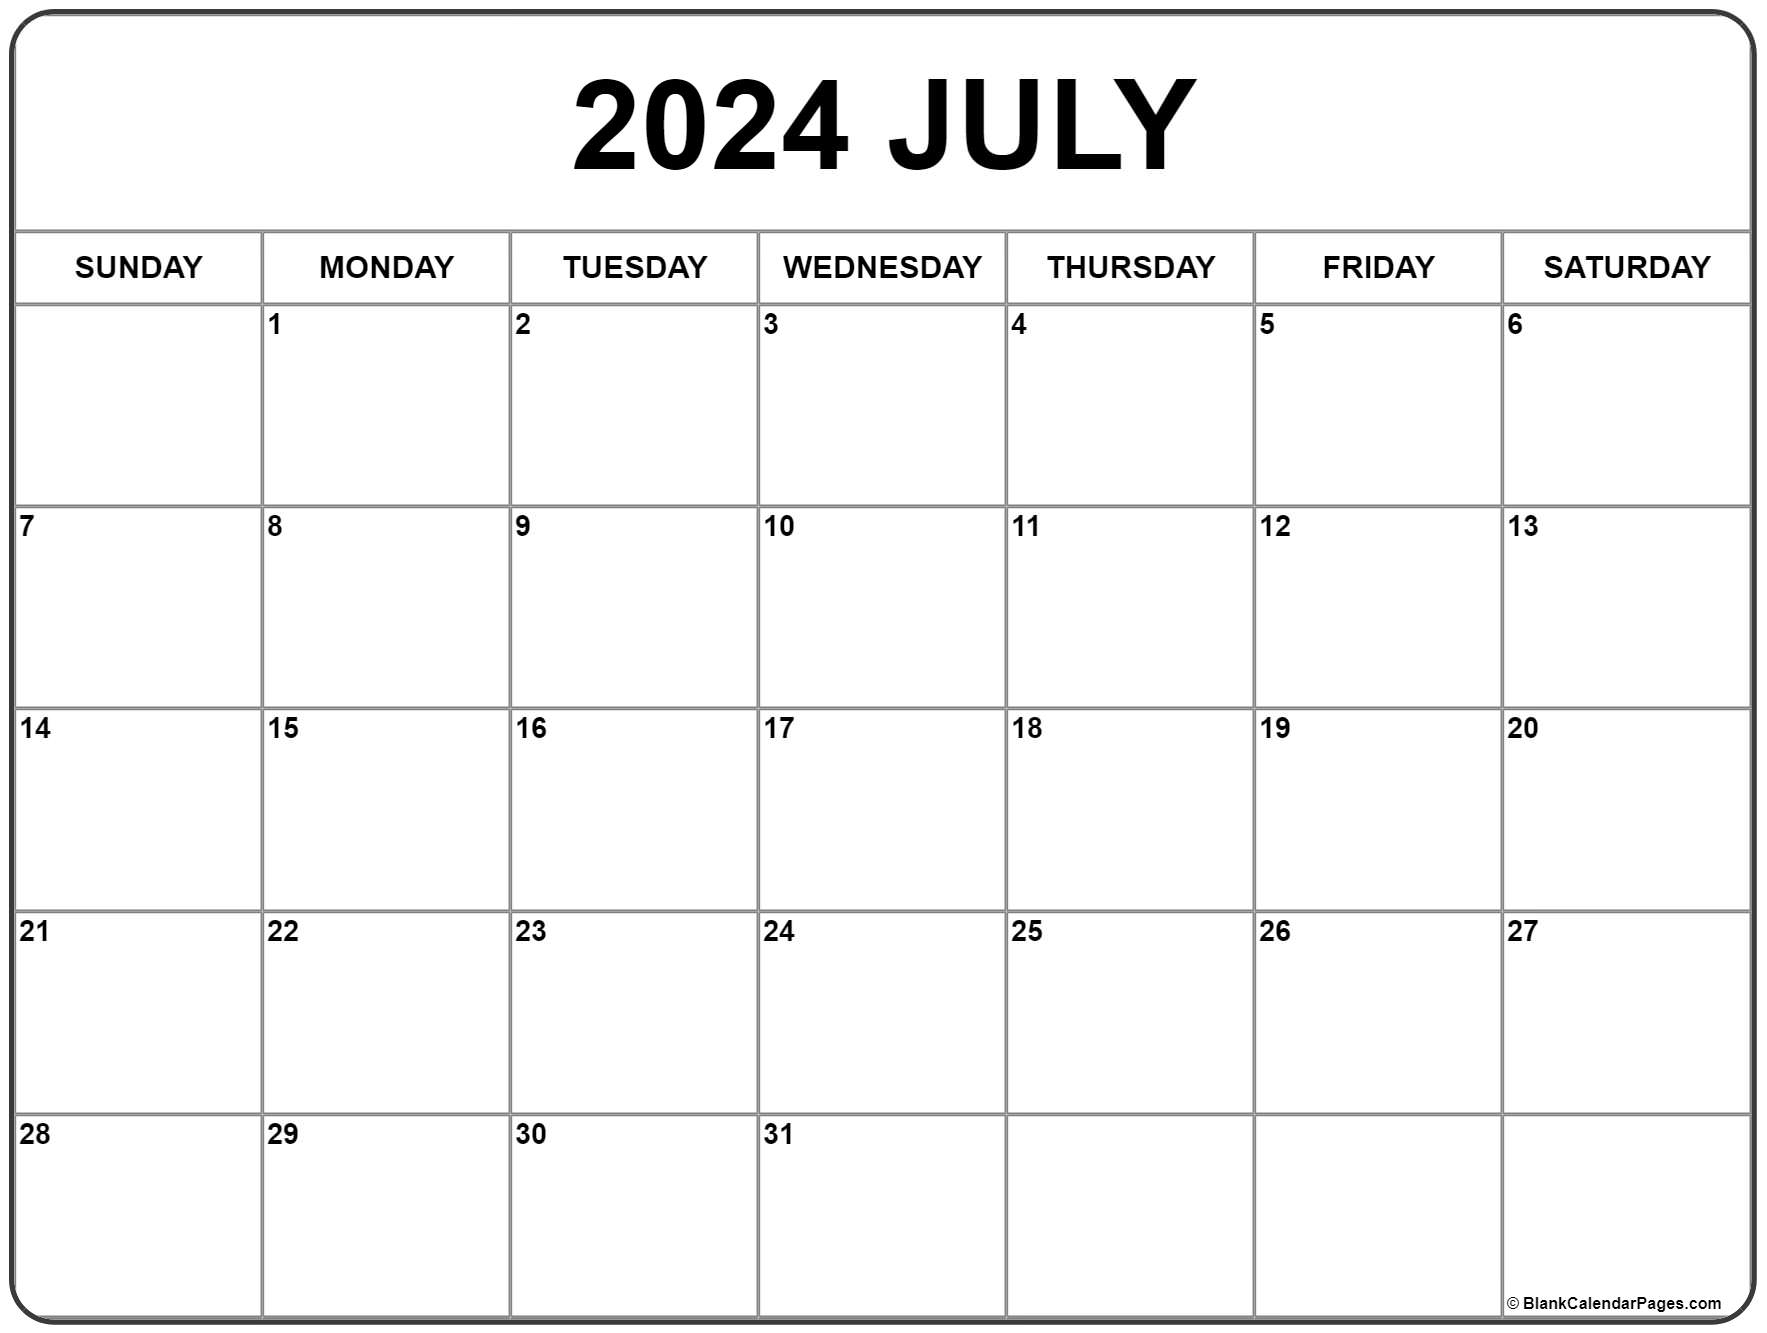 August Calendar 2021 Printable July 2021 calendar | free printable monthly calendars